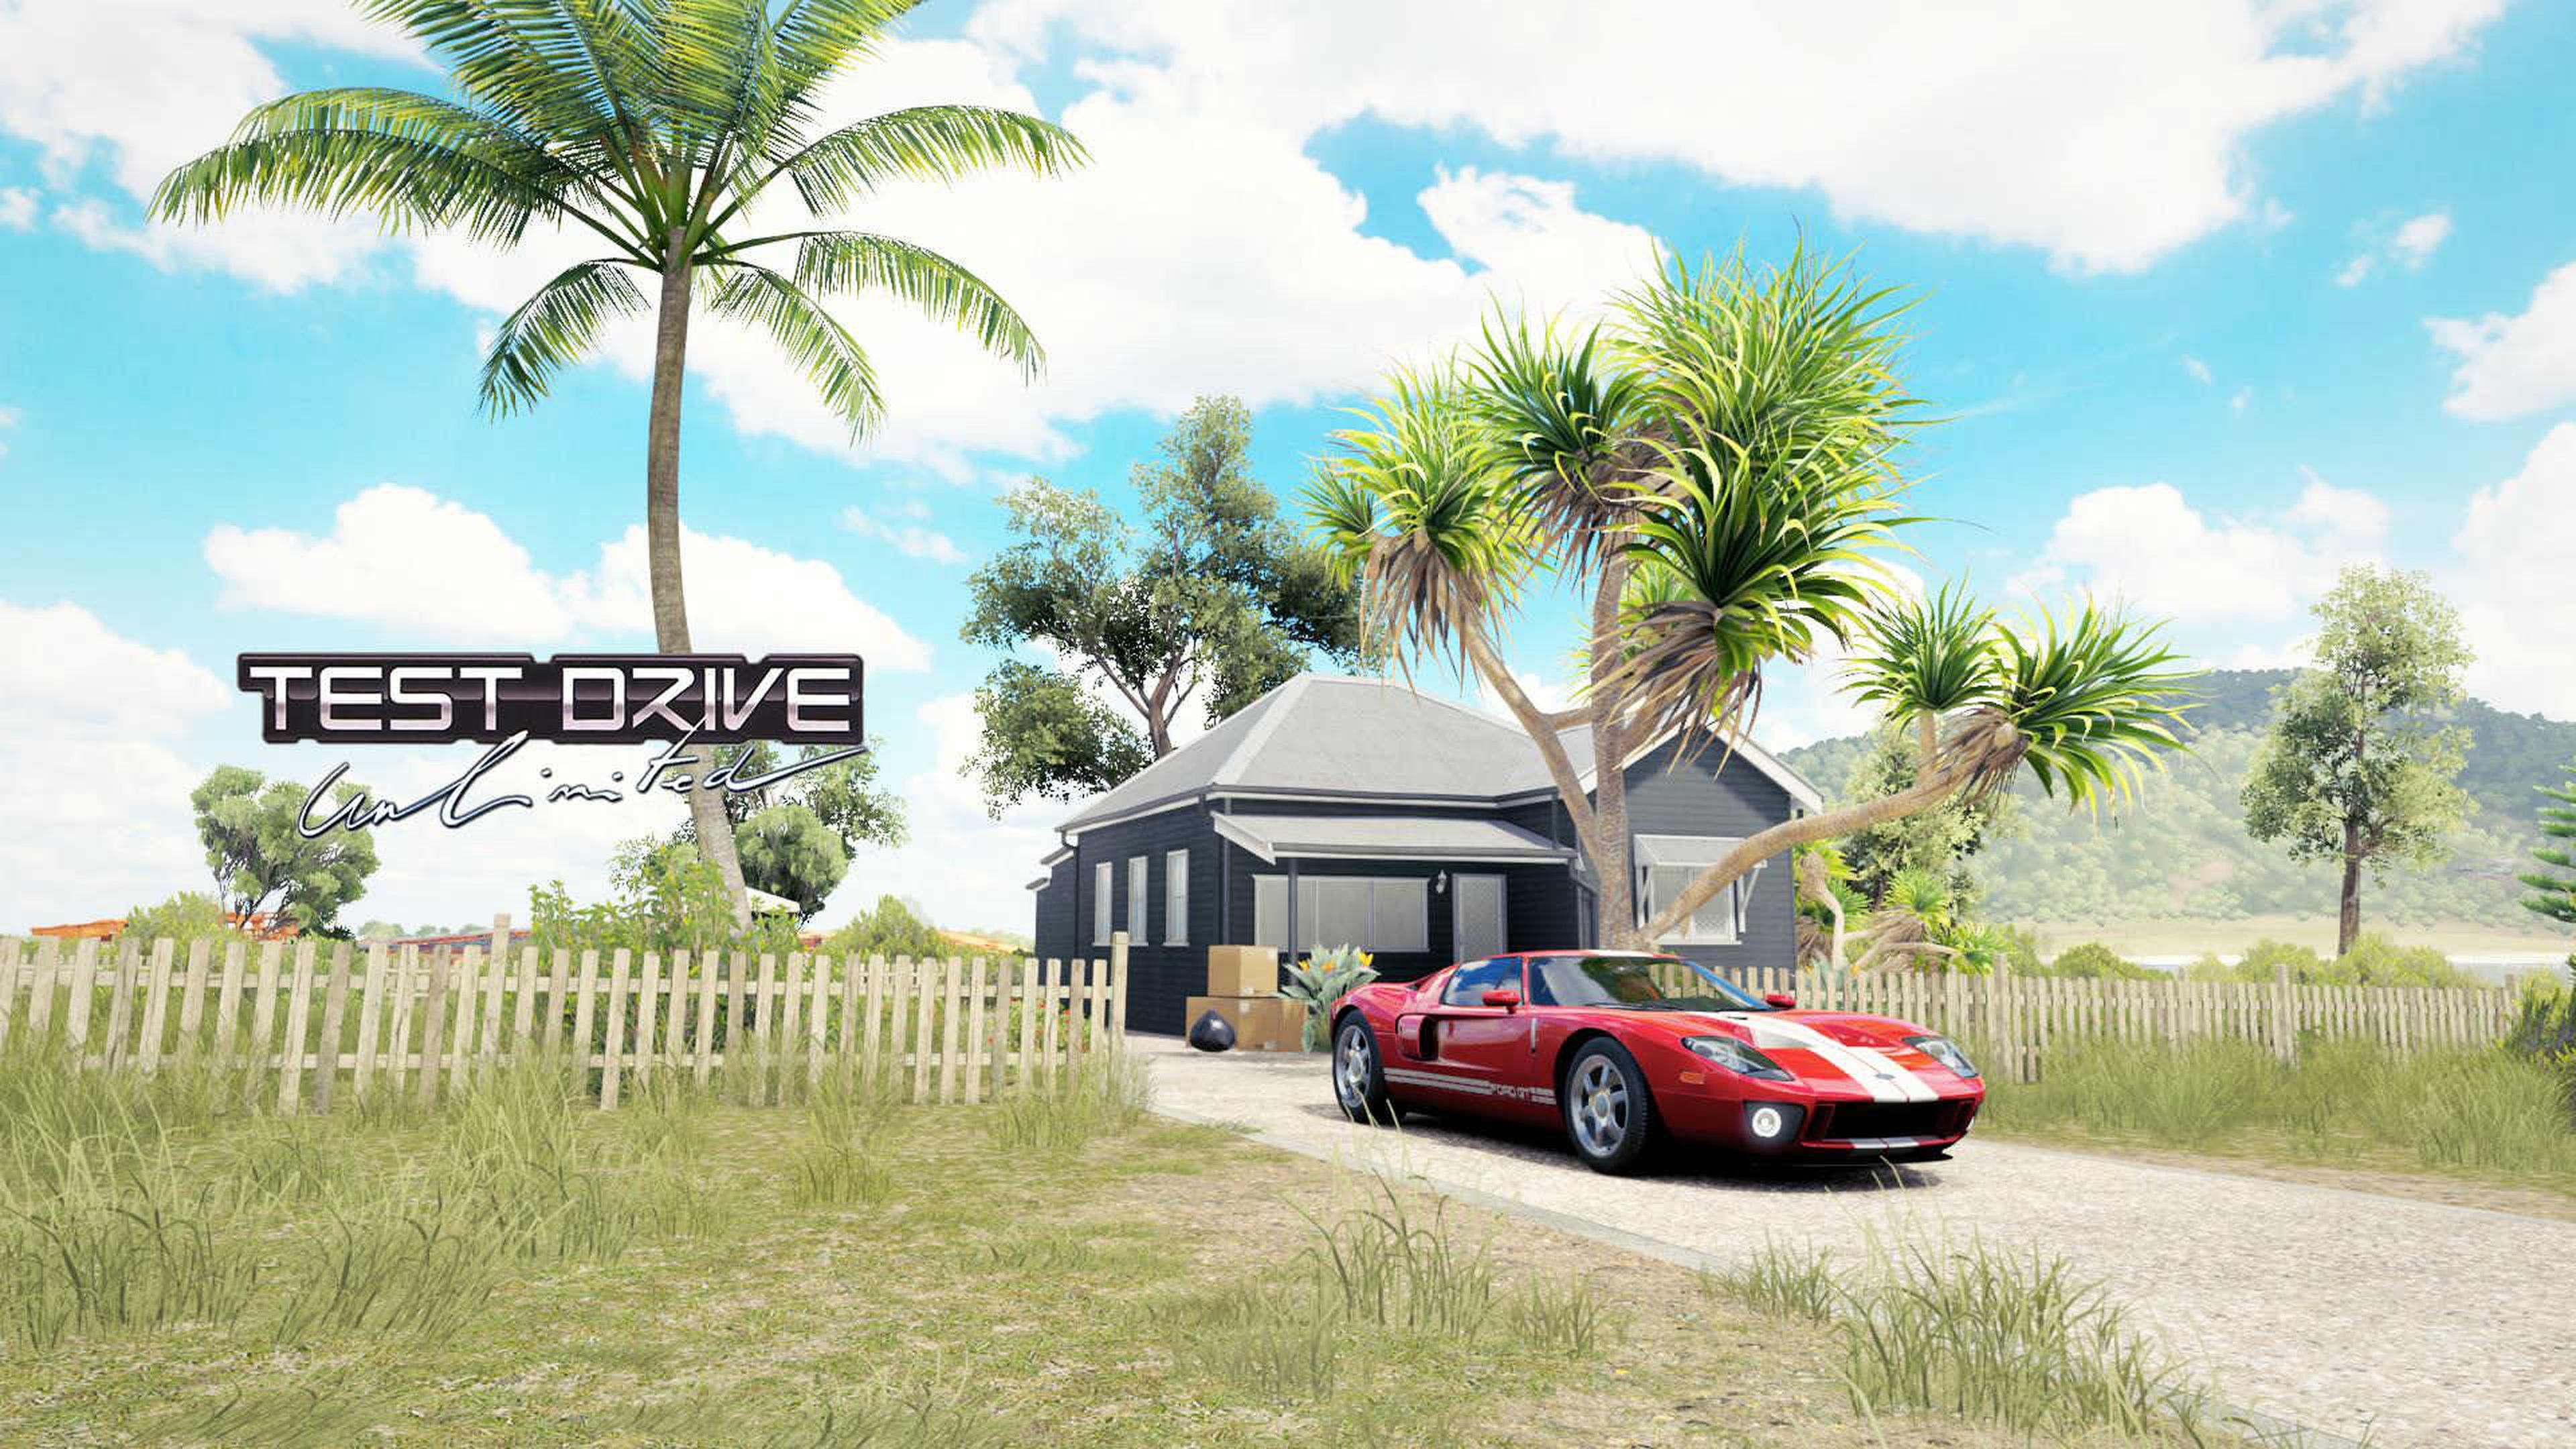 Test Drive Unlimited en Forza Horizon 3